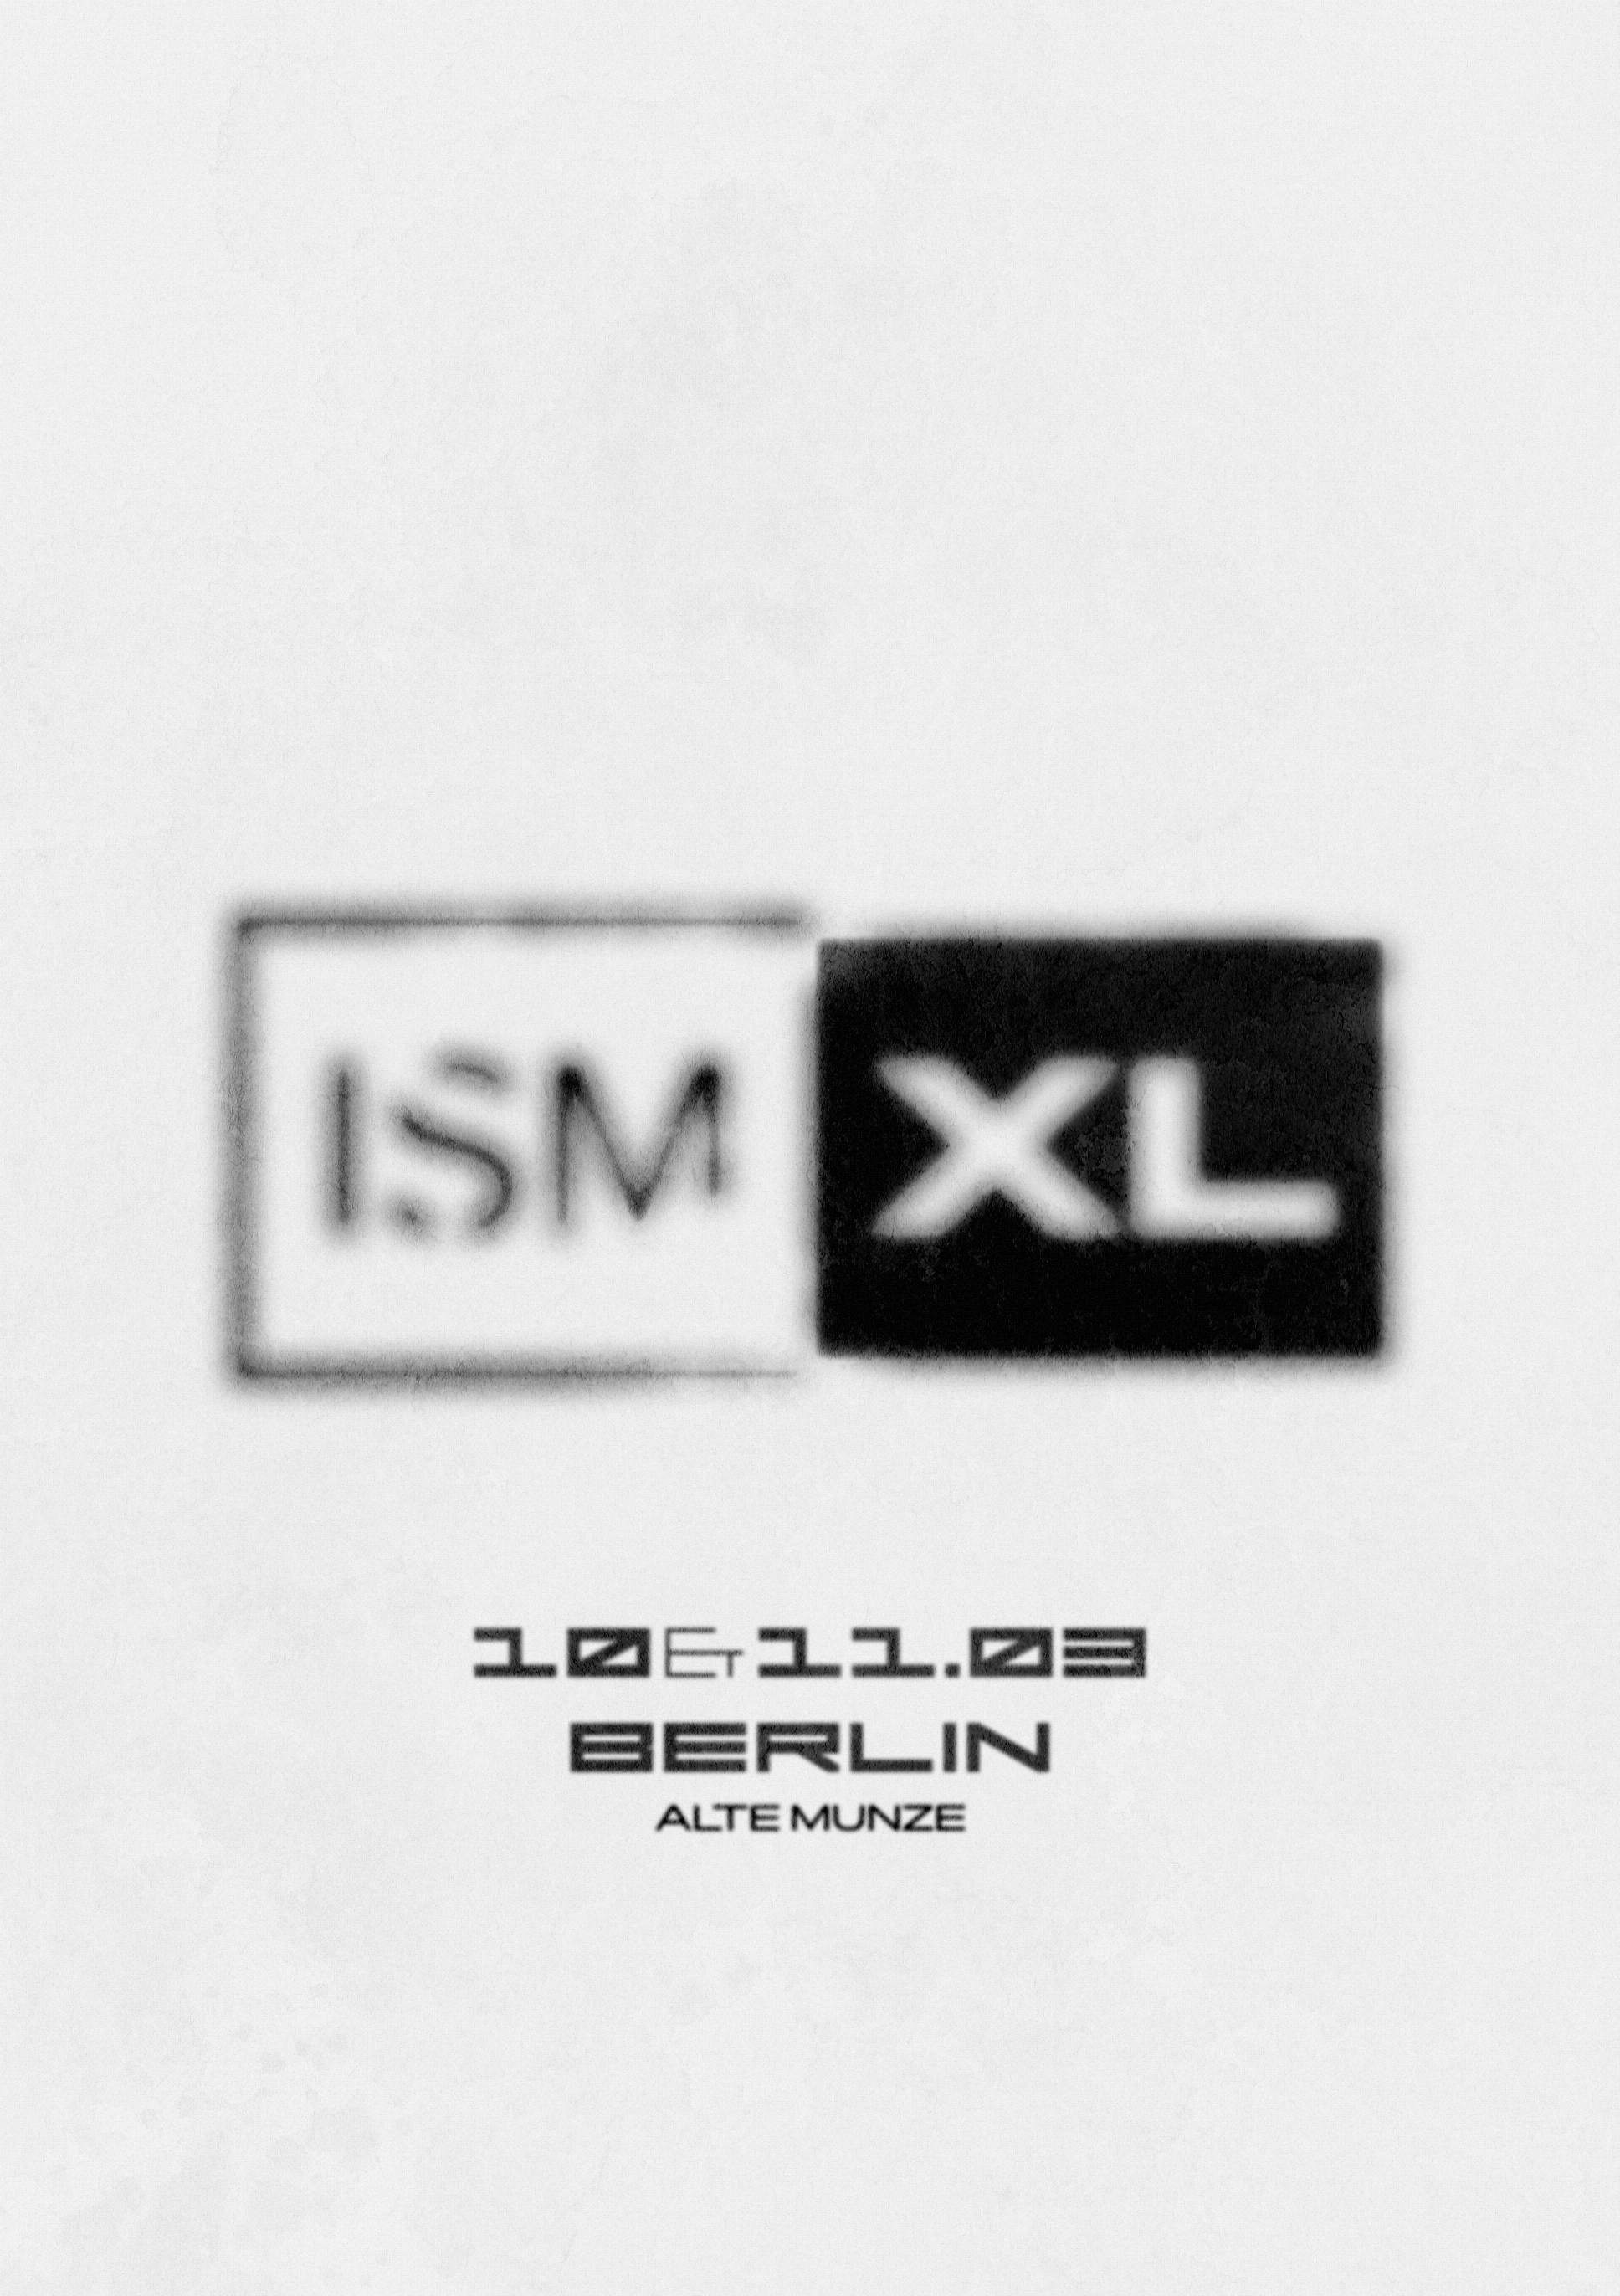 Ismus XL - Página frontal